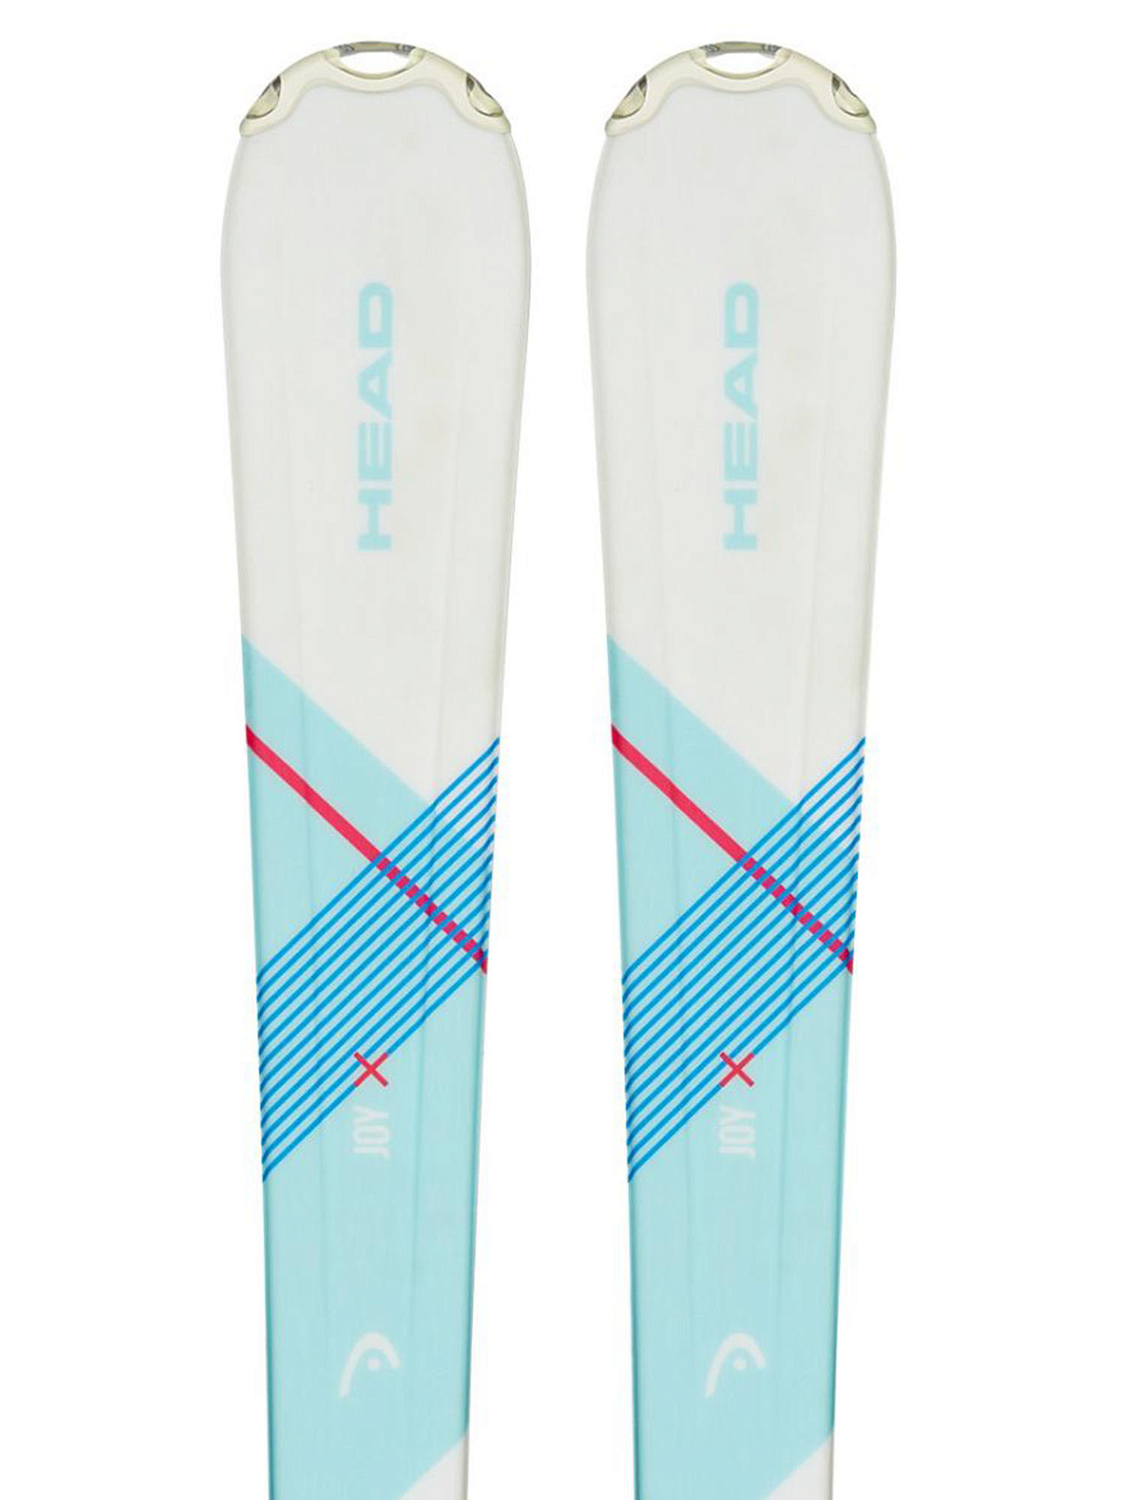 Горные лыжи с креплениями HEAD Joy SLR Pro + SLR 4.5 GW AC Brake 74 [I] White/Mint